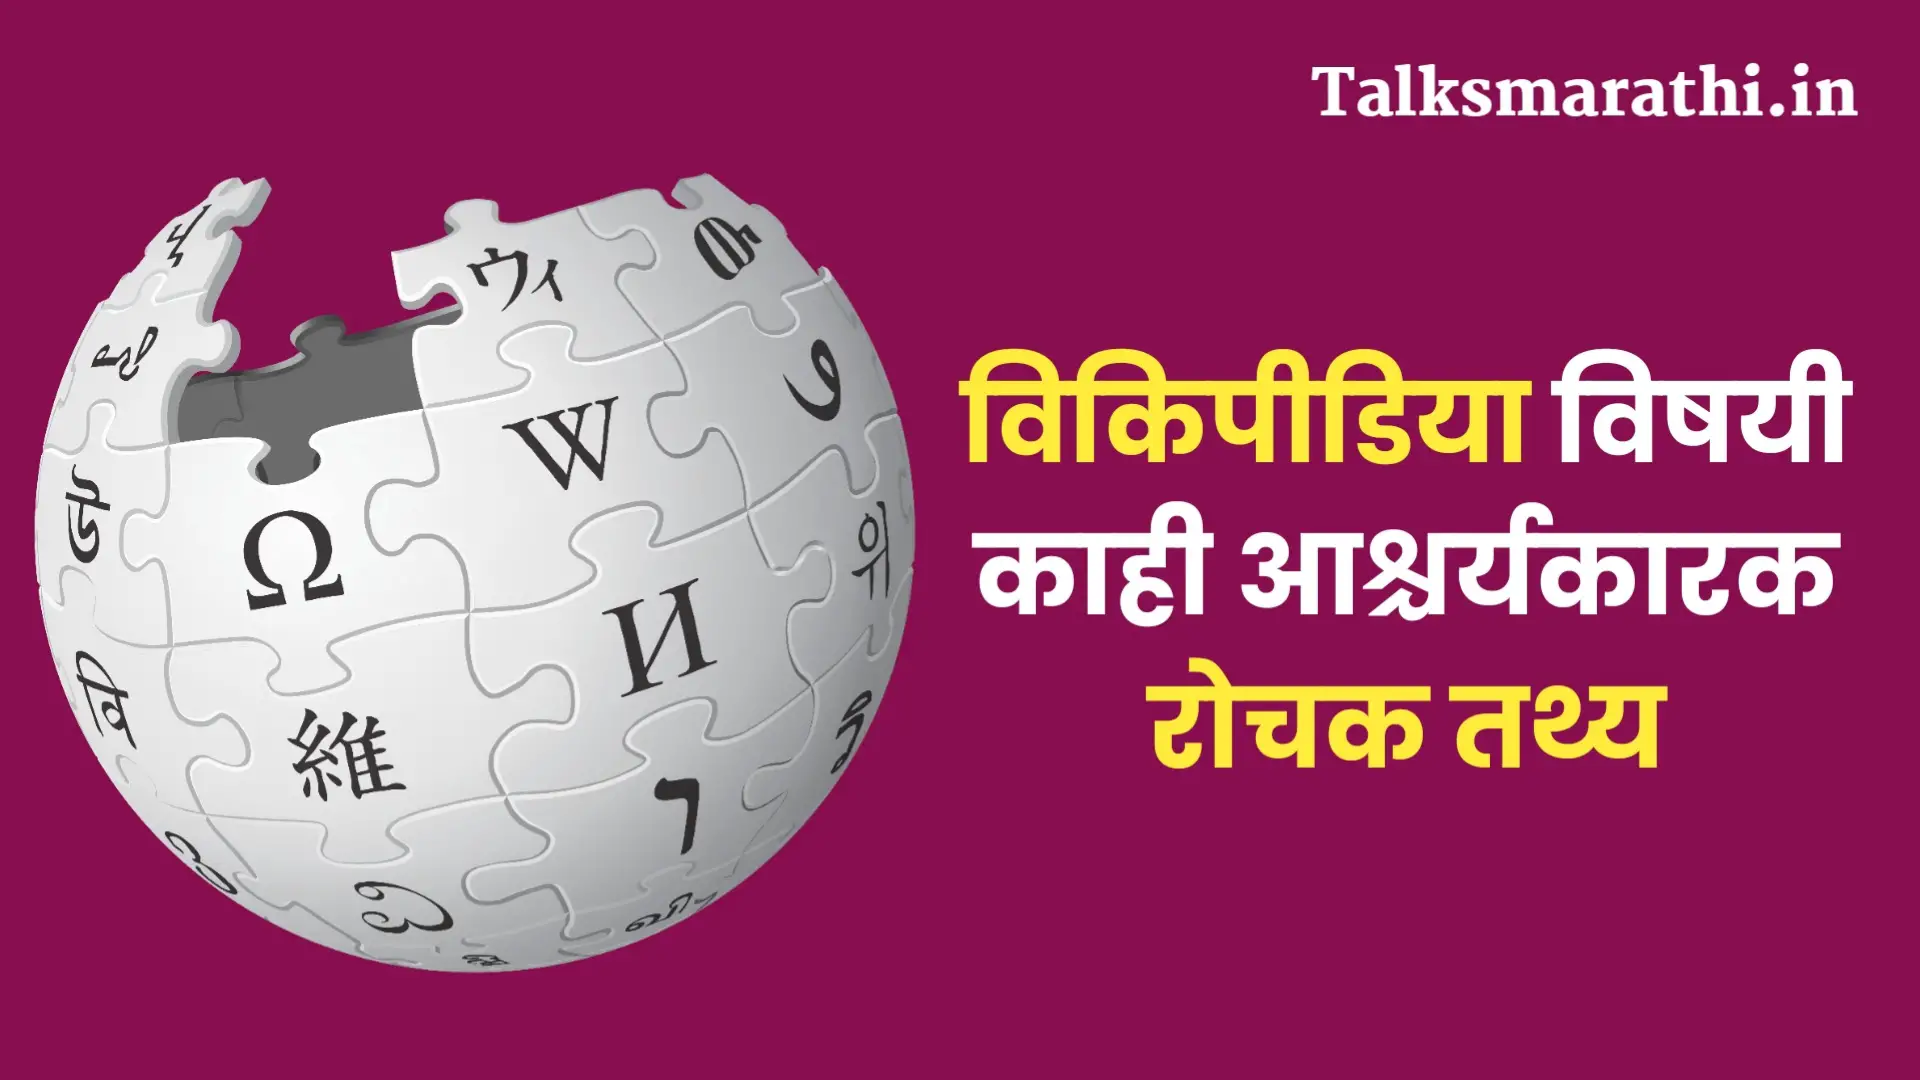 विकिपीडिया विषयी 30 रोचक तथ्य | Intresting facts about wikipedia in Marathi